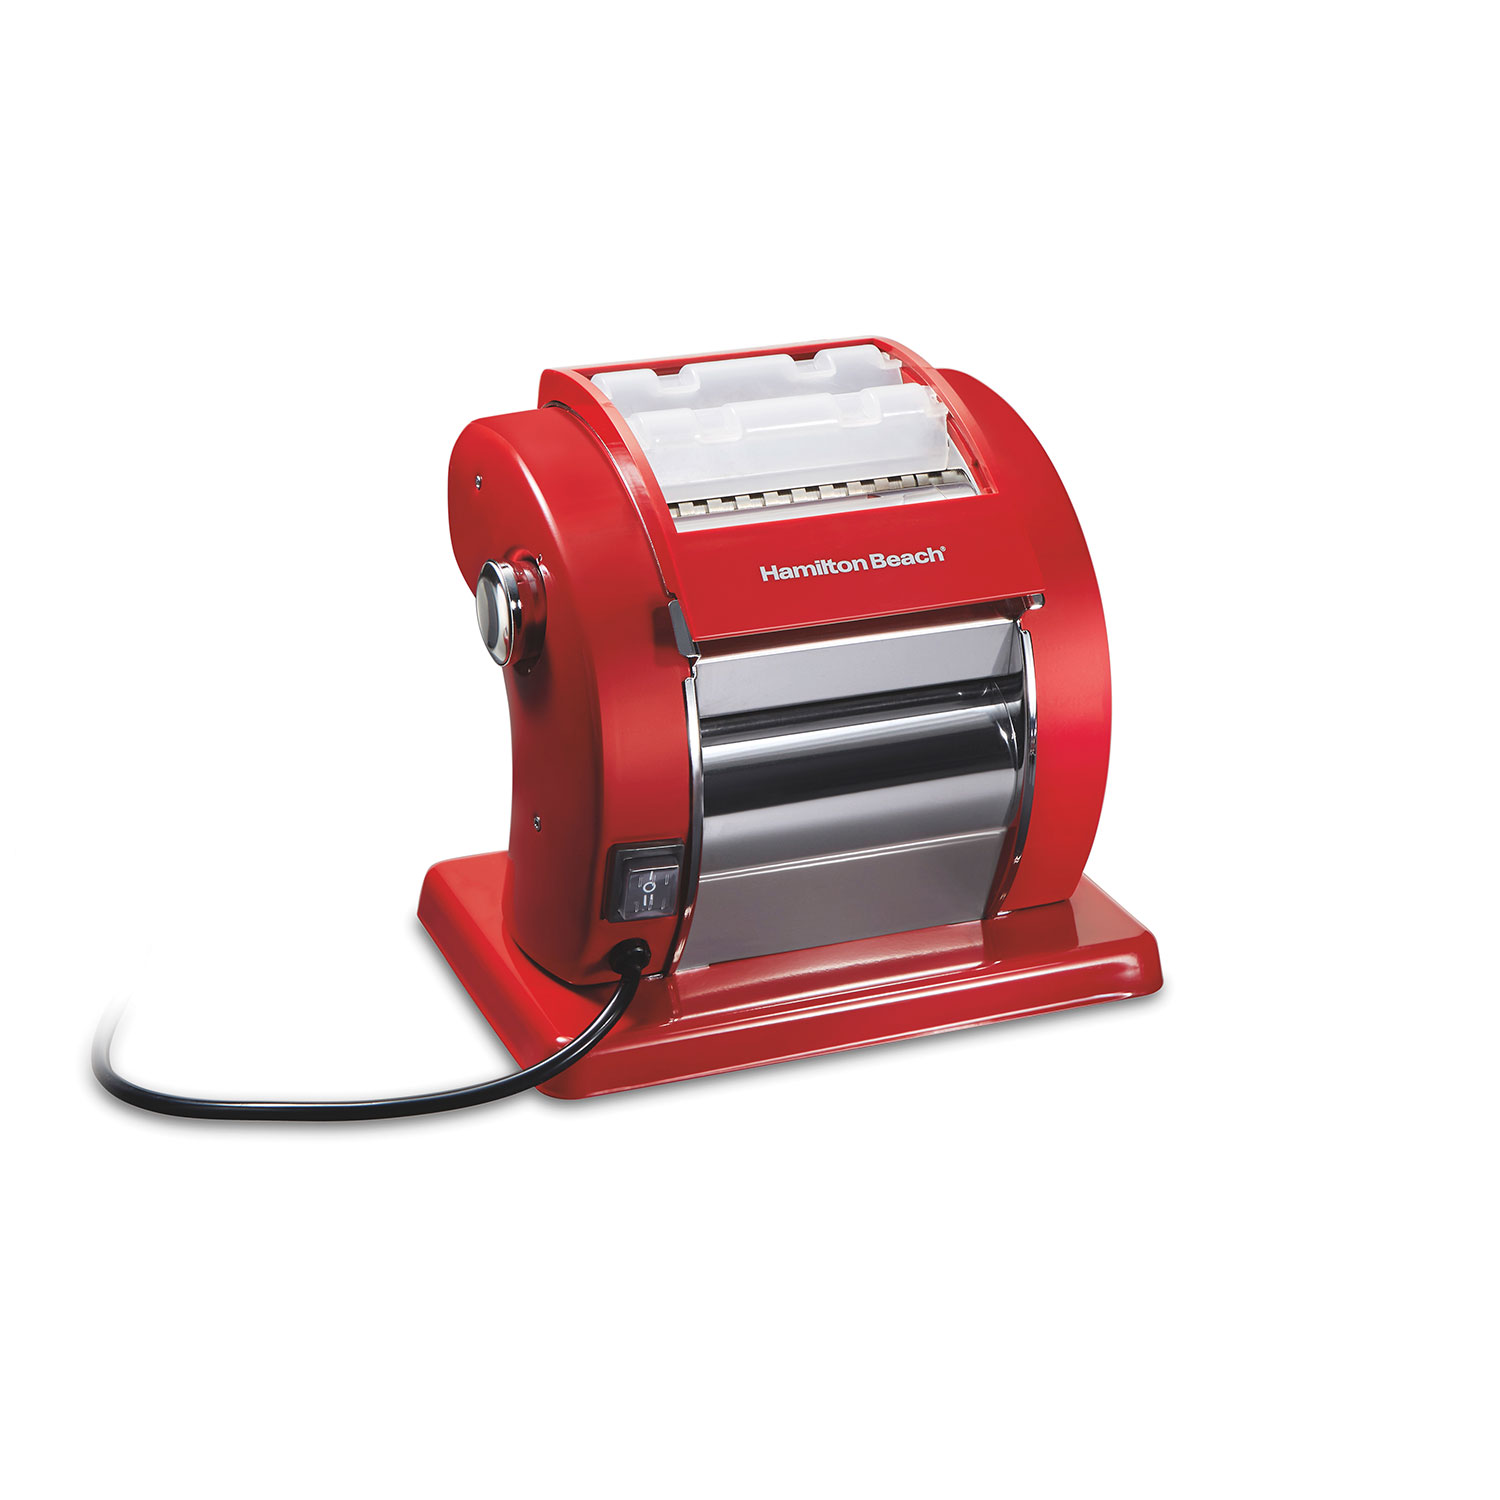 Electric Pasta Machine, Red (86651)